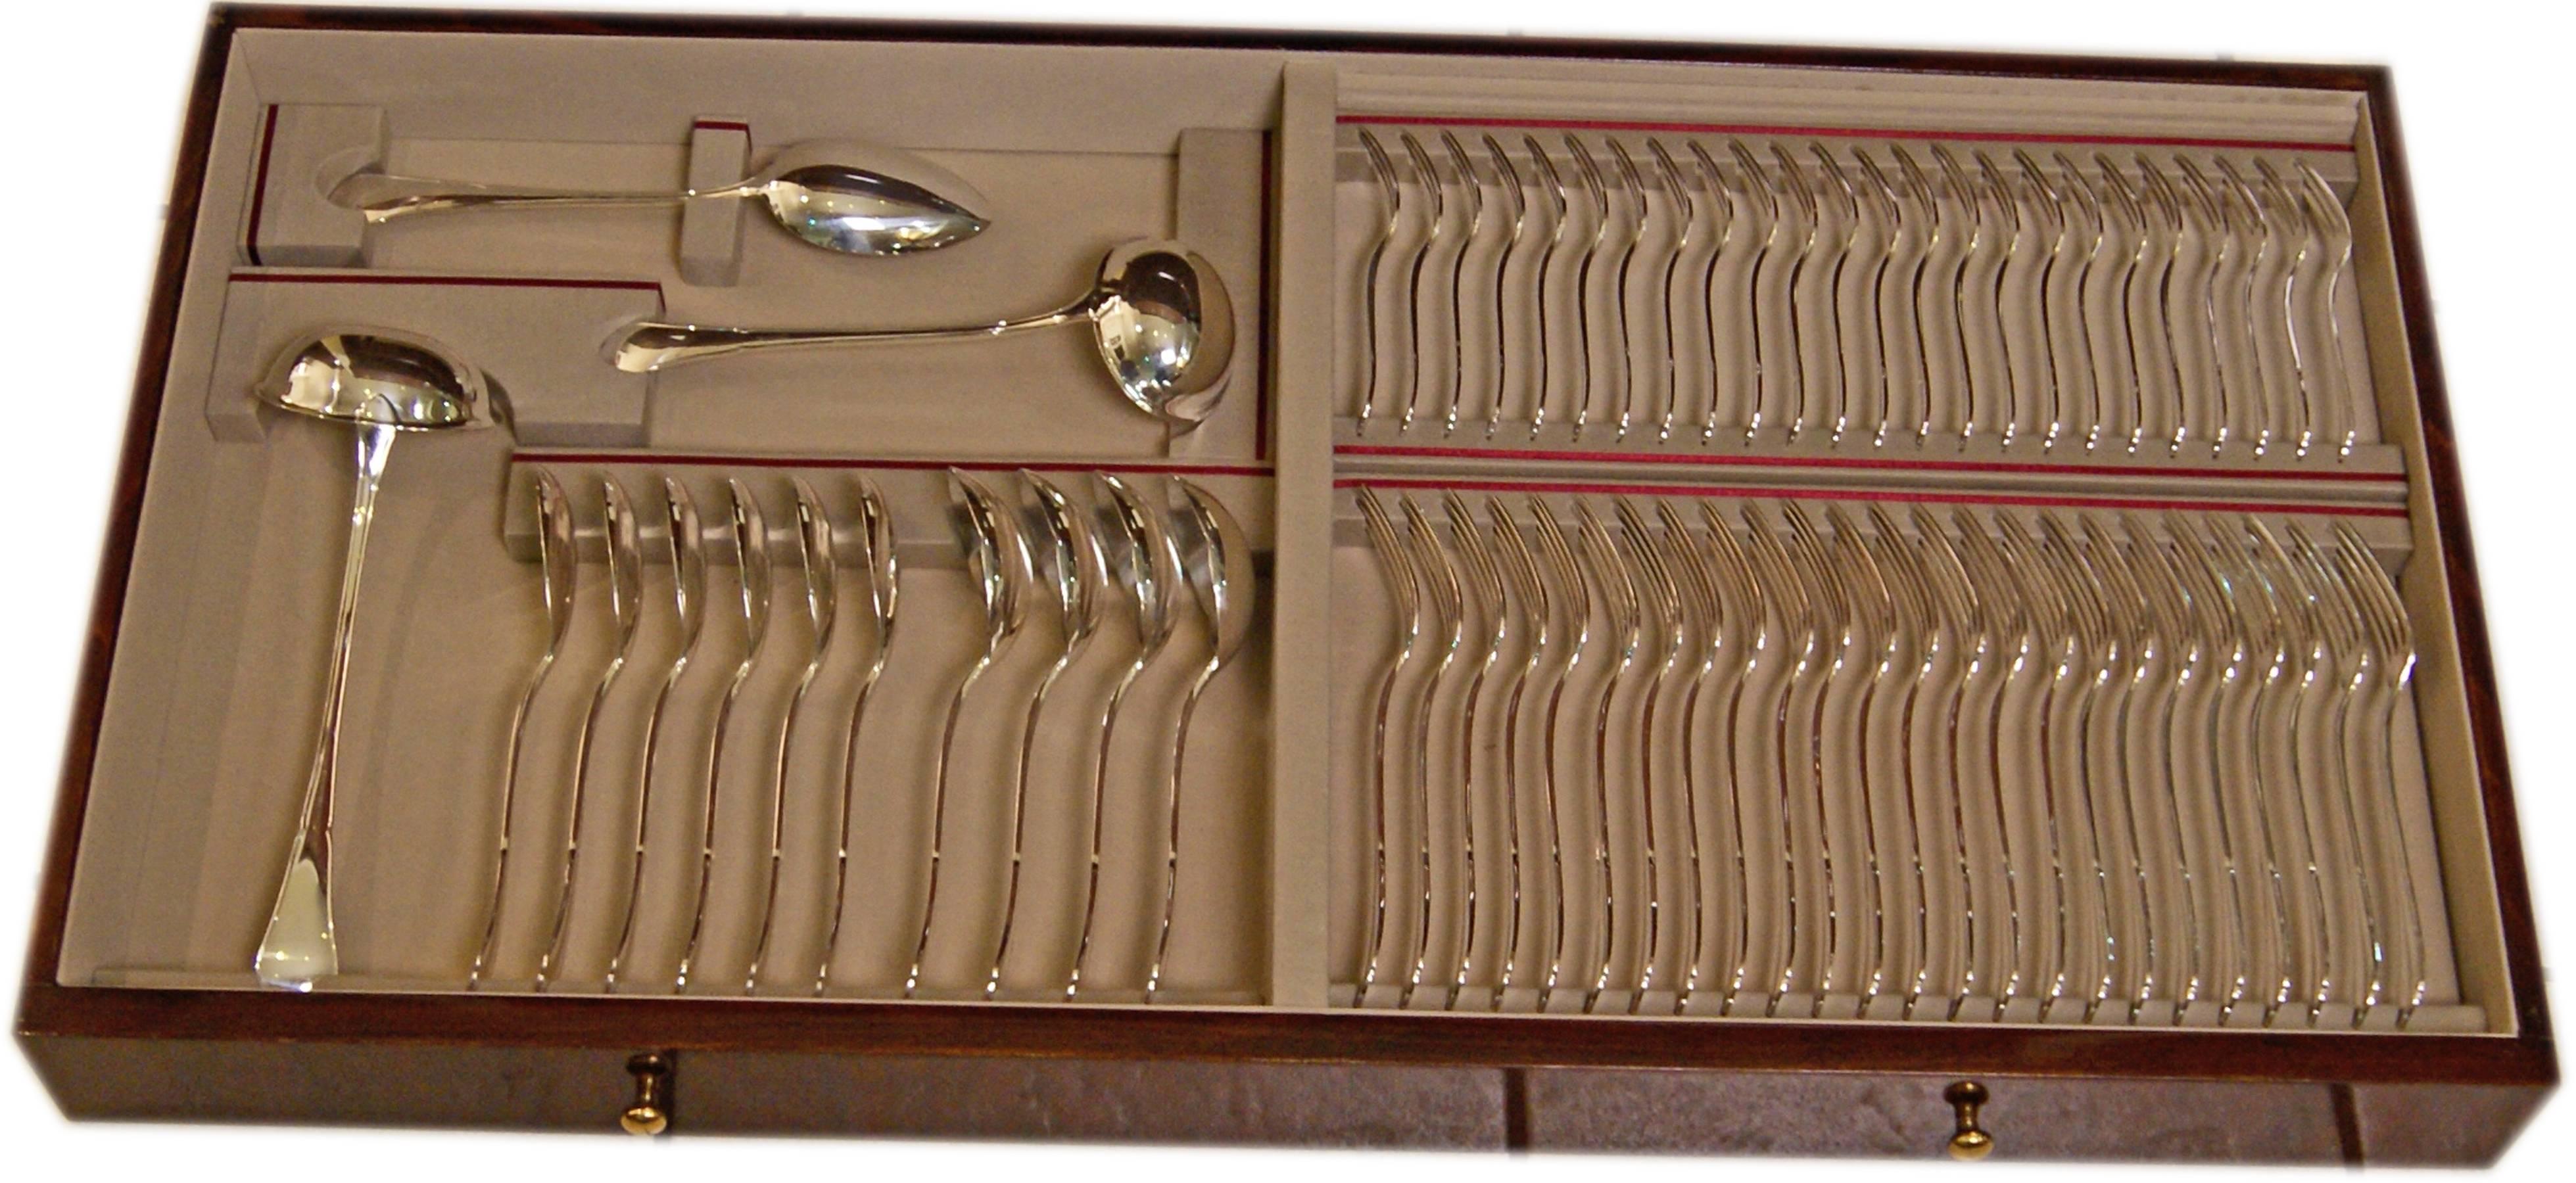 Chippendale Silver Flatware Cutlery 24 Persons, Bremer Silberwarenfabrik, Germany, 1910